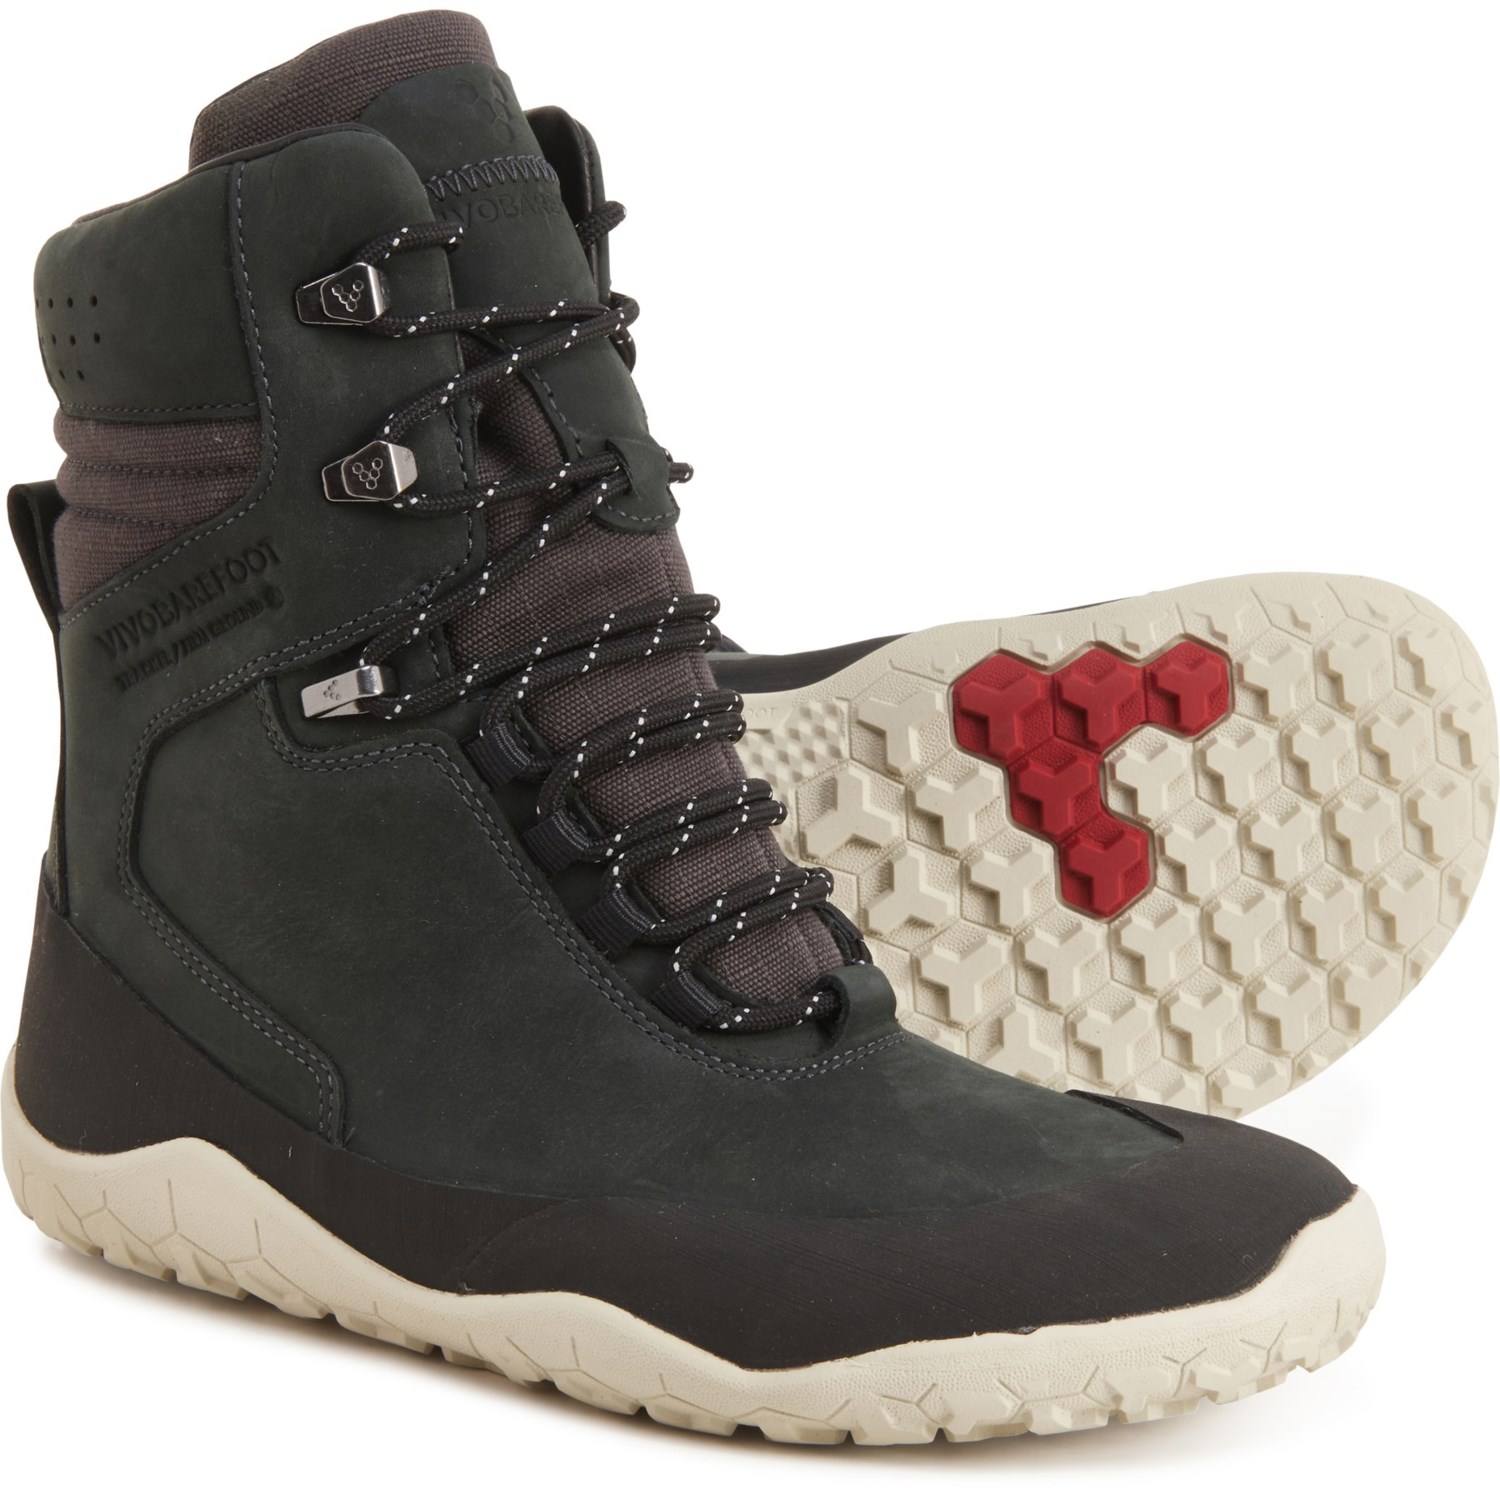 VivoBarefoot Tracker Hi II FG Hiking Boots (For Women) - Save 37%